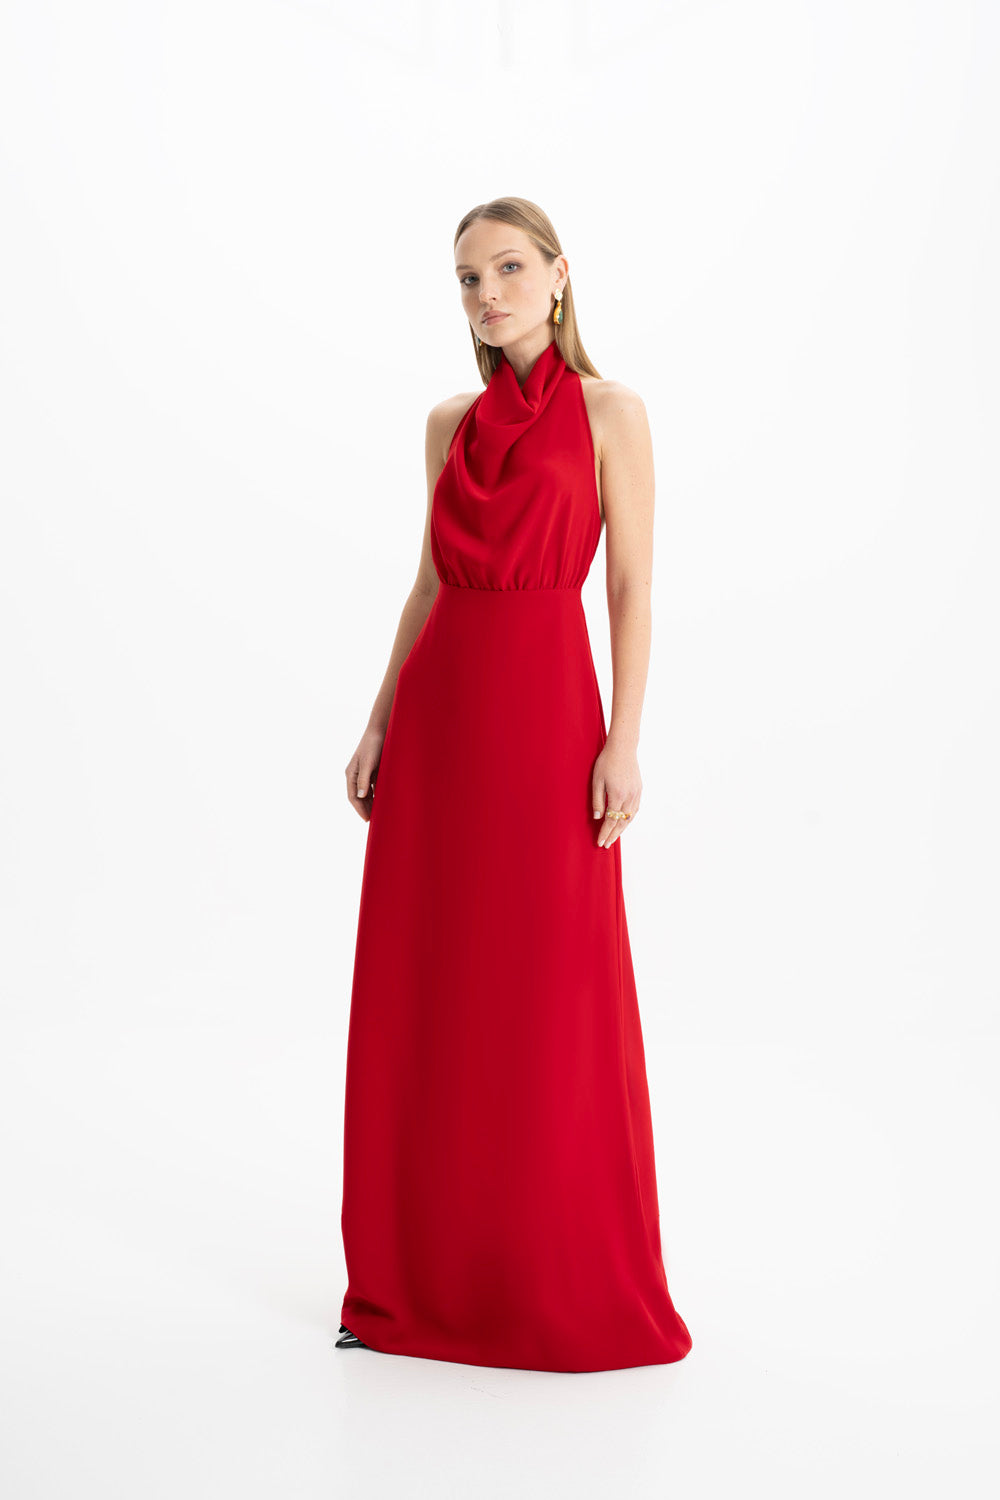 Kate Crepe Red Maxi Dress